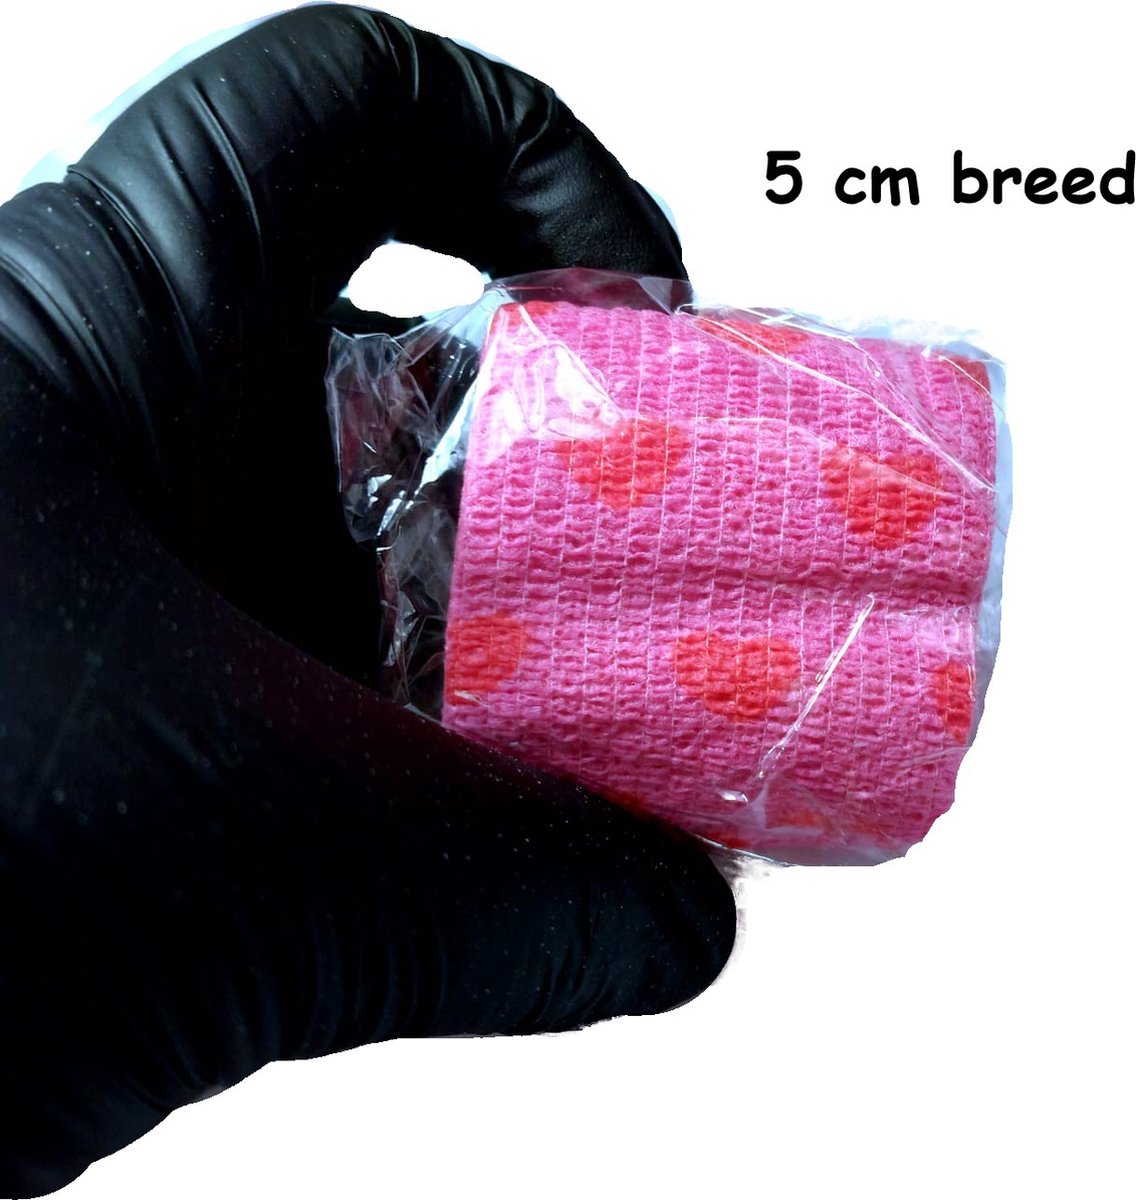 Tattoo bandage - 5 cm breed - 2 stuks - Roze hartjes - Grip tape - Sport bandage - Zelfklevende tape - Merkloos